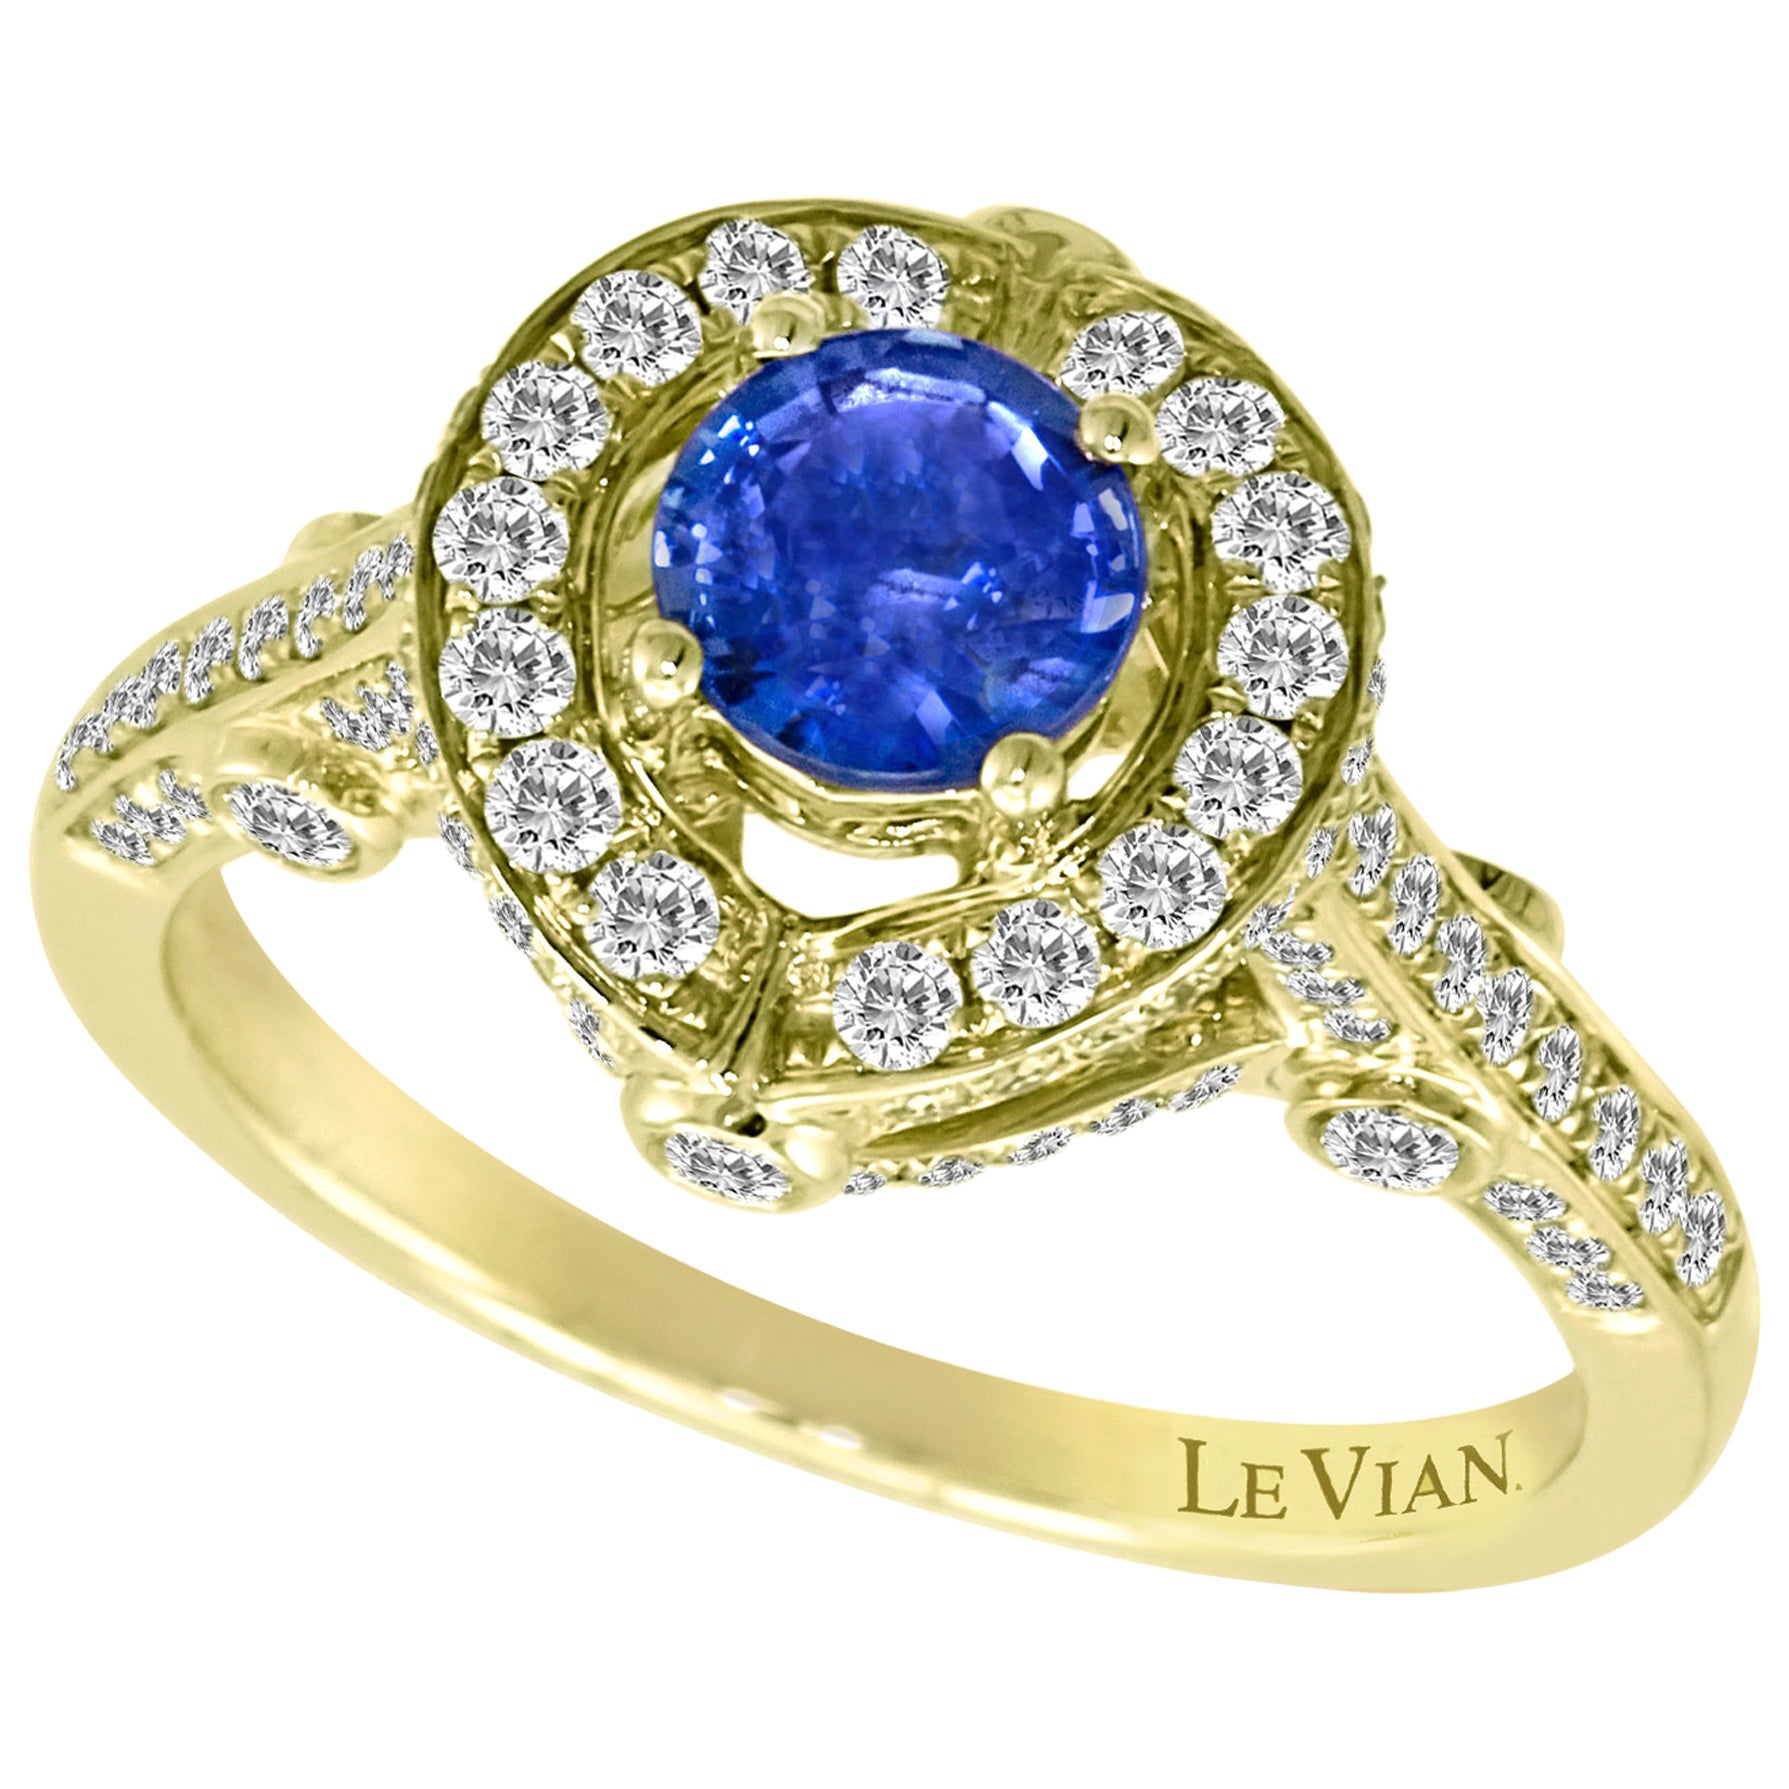 LeVian 18K Yellow Gold Blue Ceylon Sapphire Round Diamond Halo Cocktail Ring For Sale